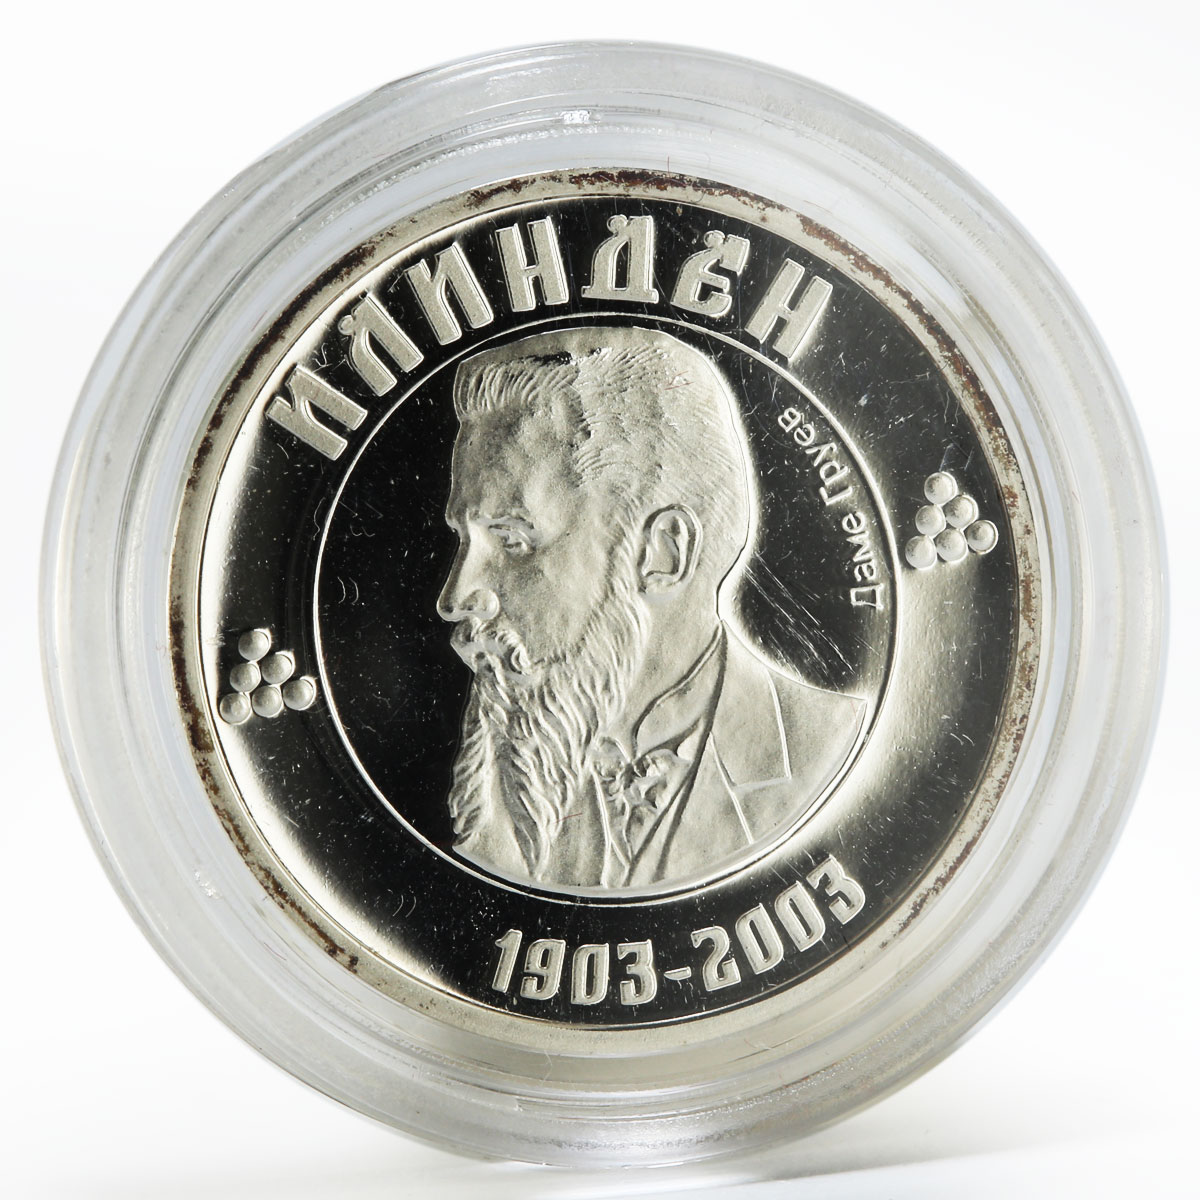 Macedonia 100 denari Dame Gruev revolutionary proof silver coin 2003